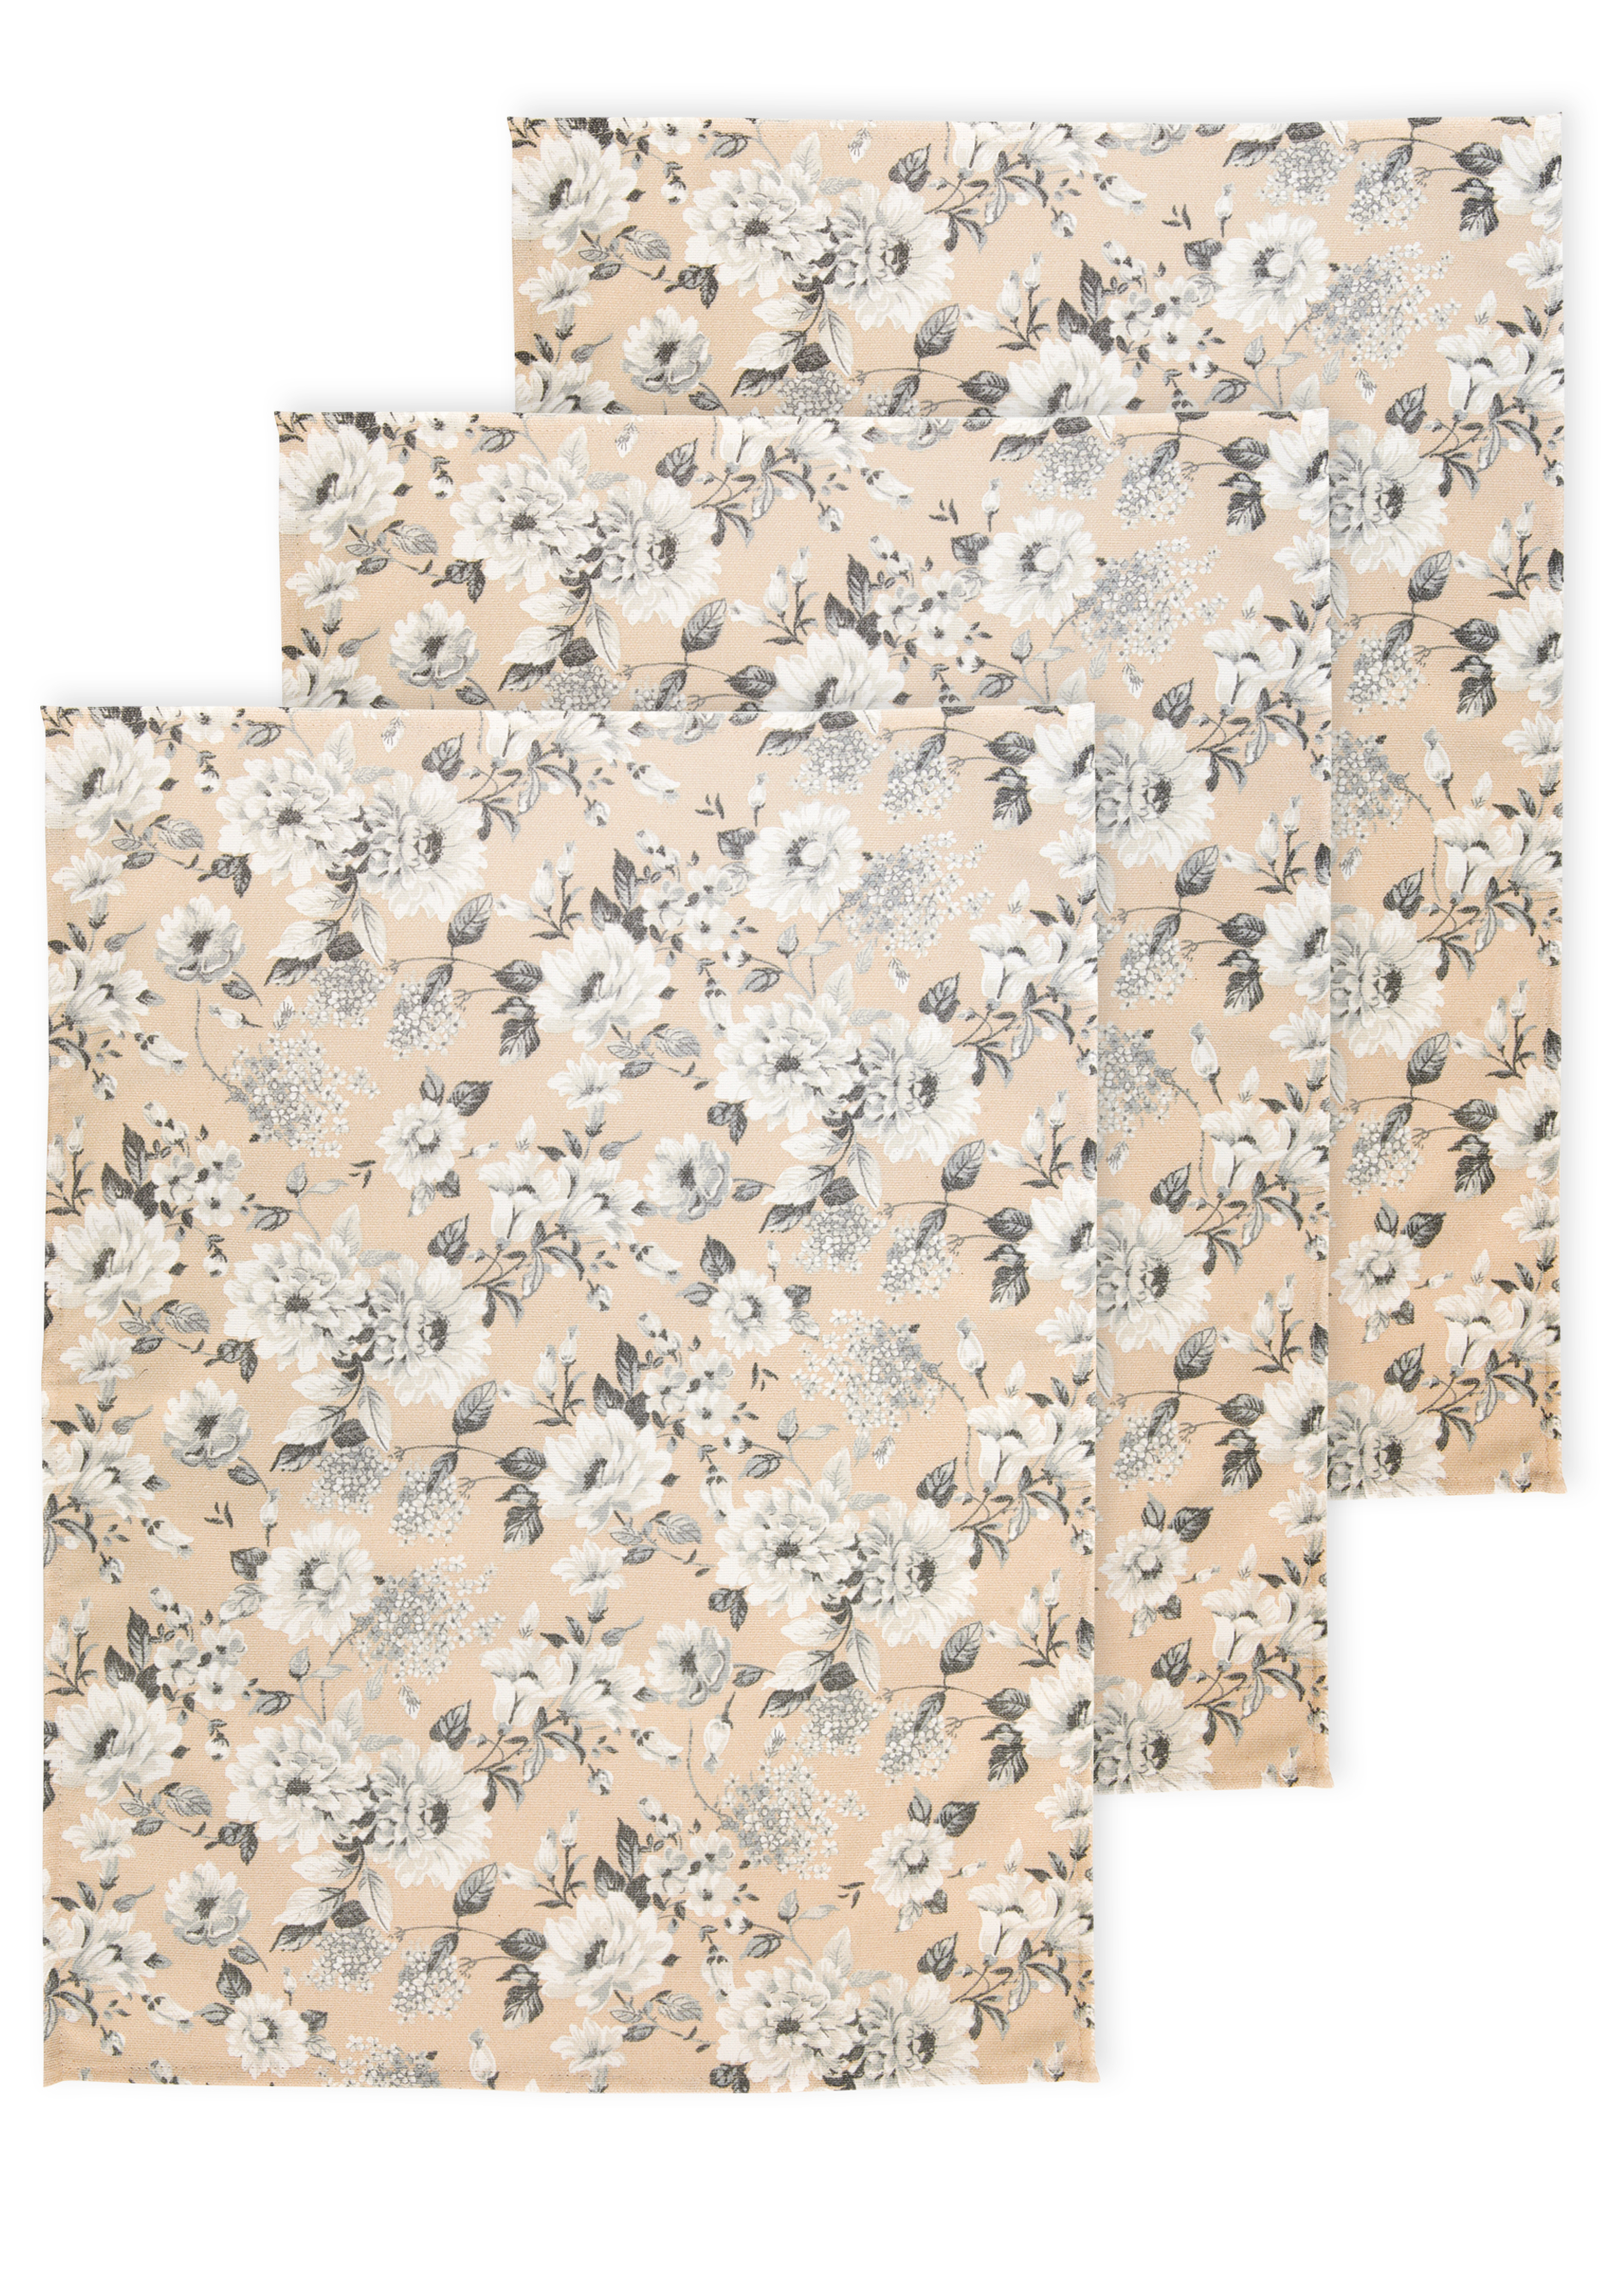 Полотенца "Белый цветок", 3 шт. Василиса, размер 47*61